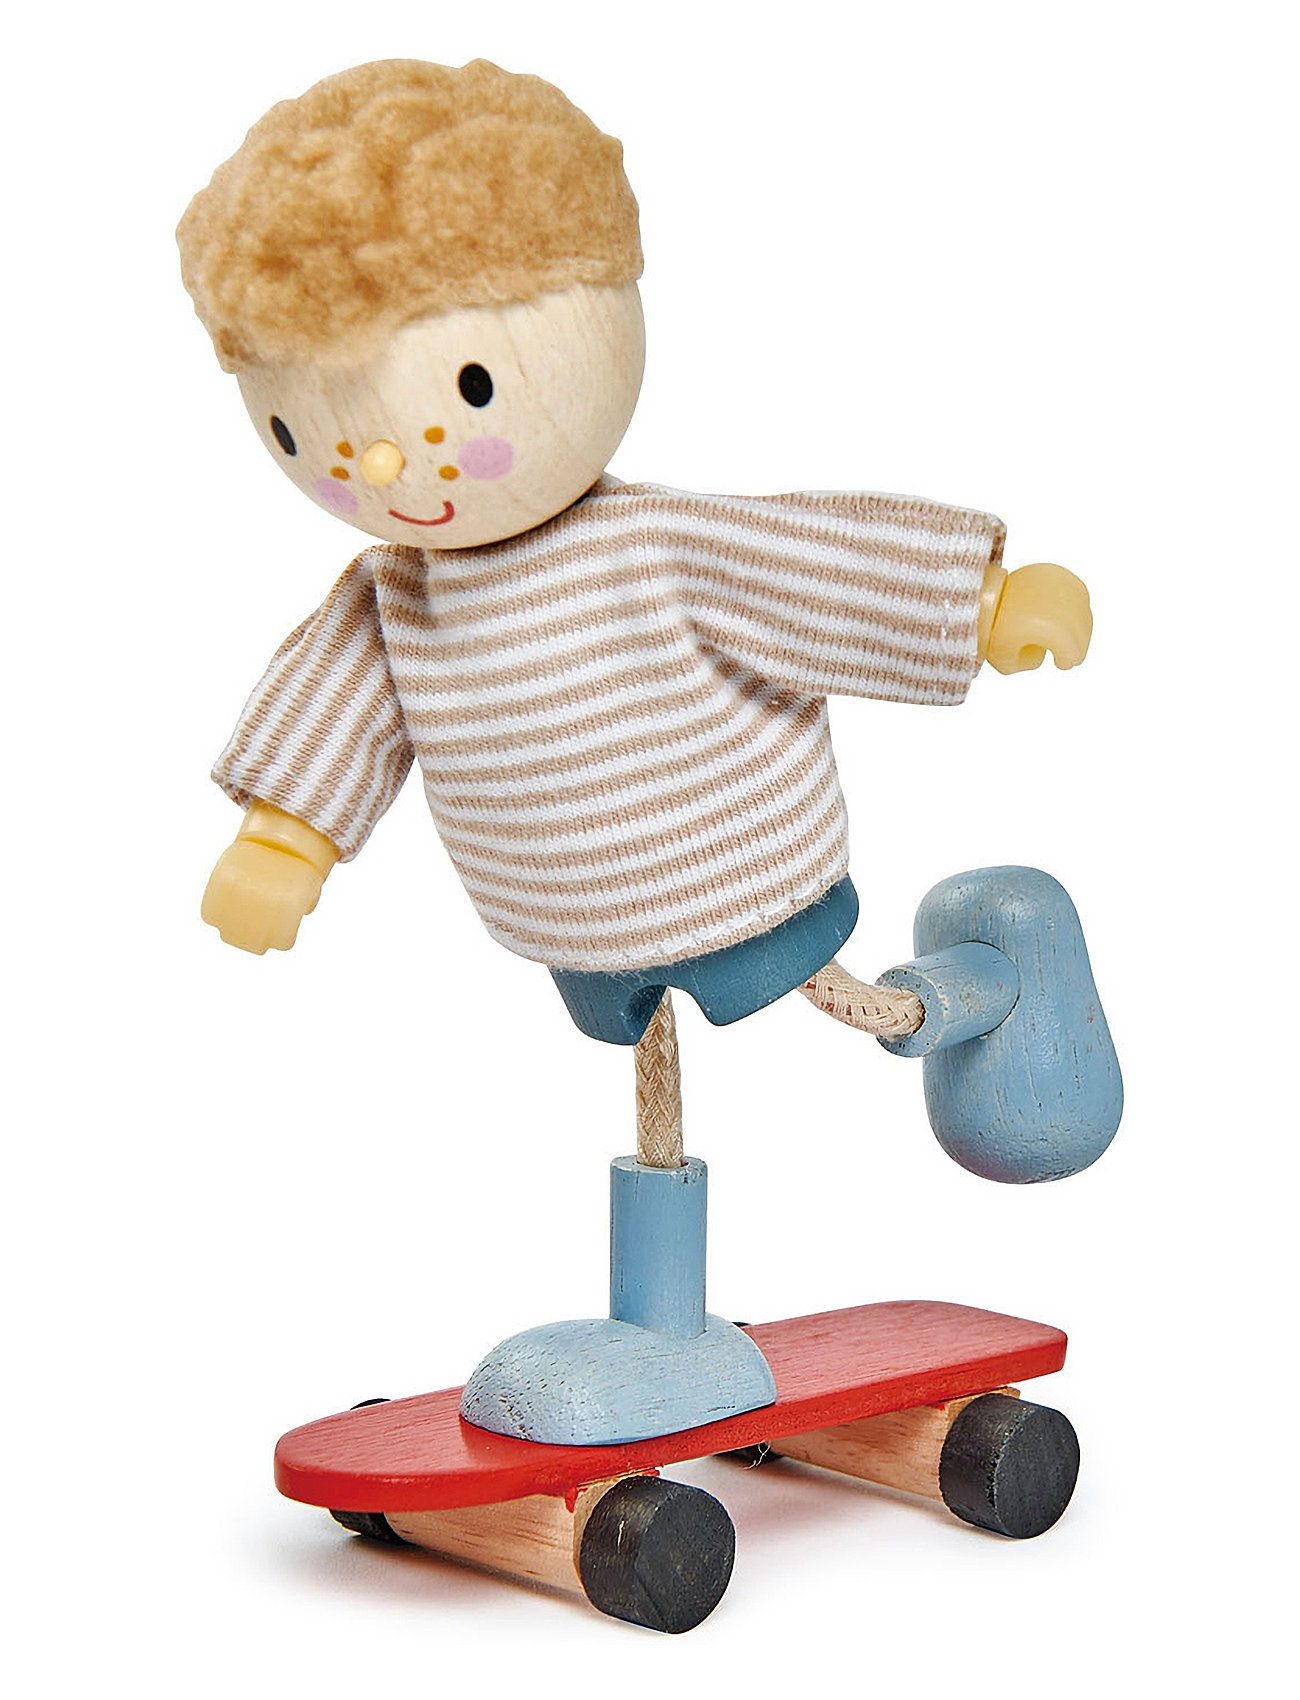 Edward With Skateboard Toys Playsets & Action Figures Wooden Figures Multi/patterned Tender Leaf